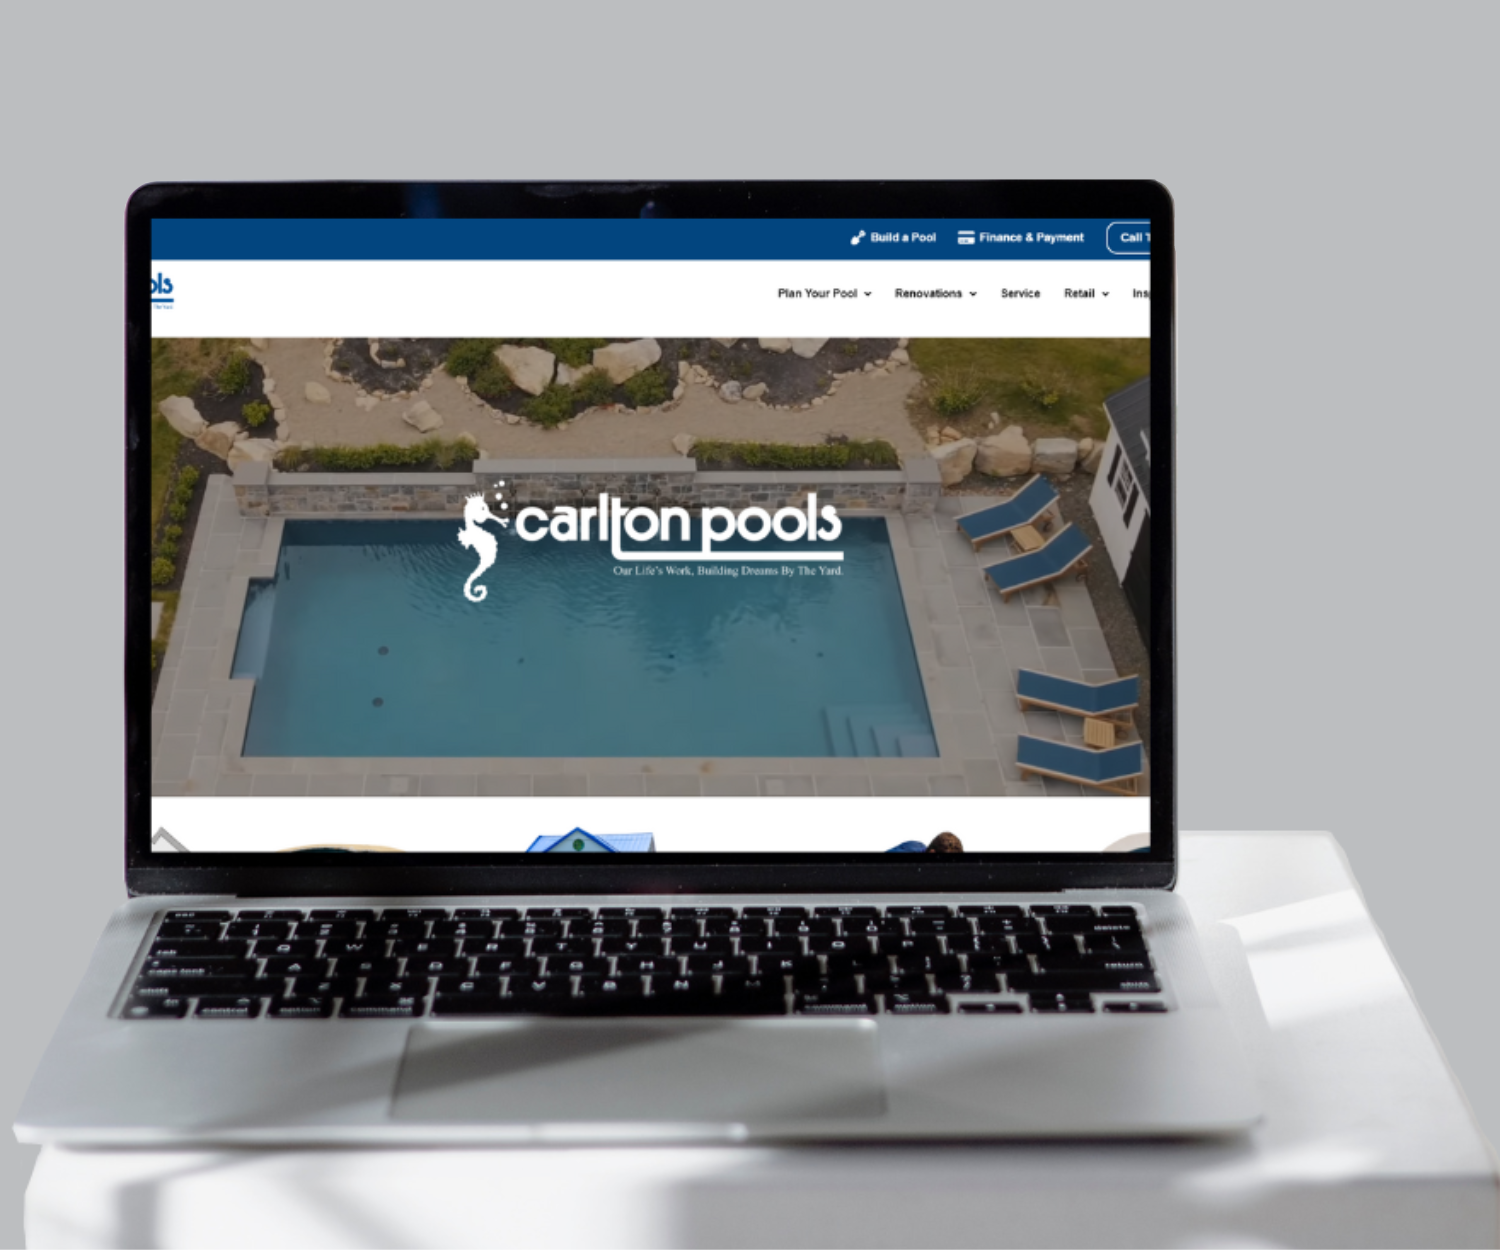 carlton pools website on a computer screen